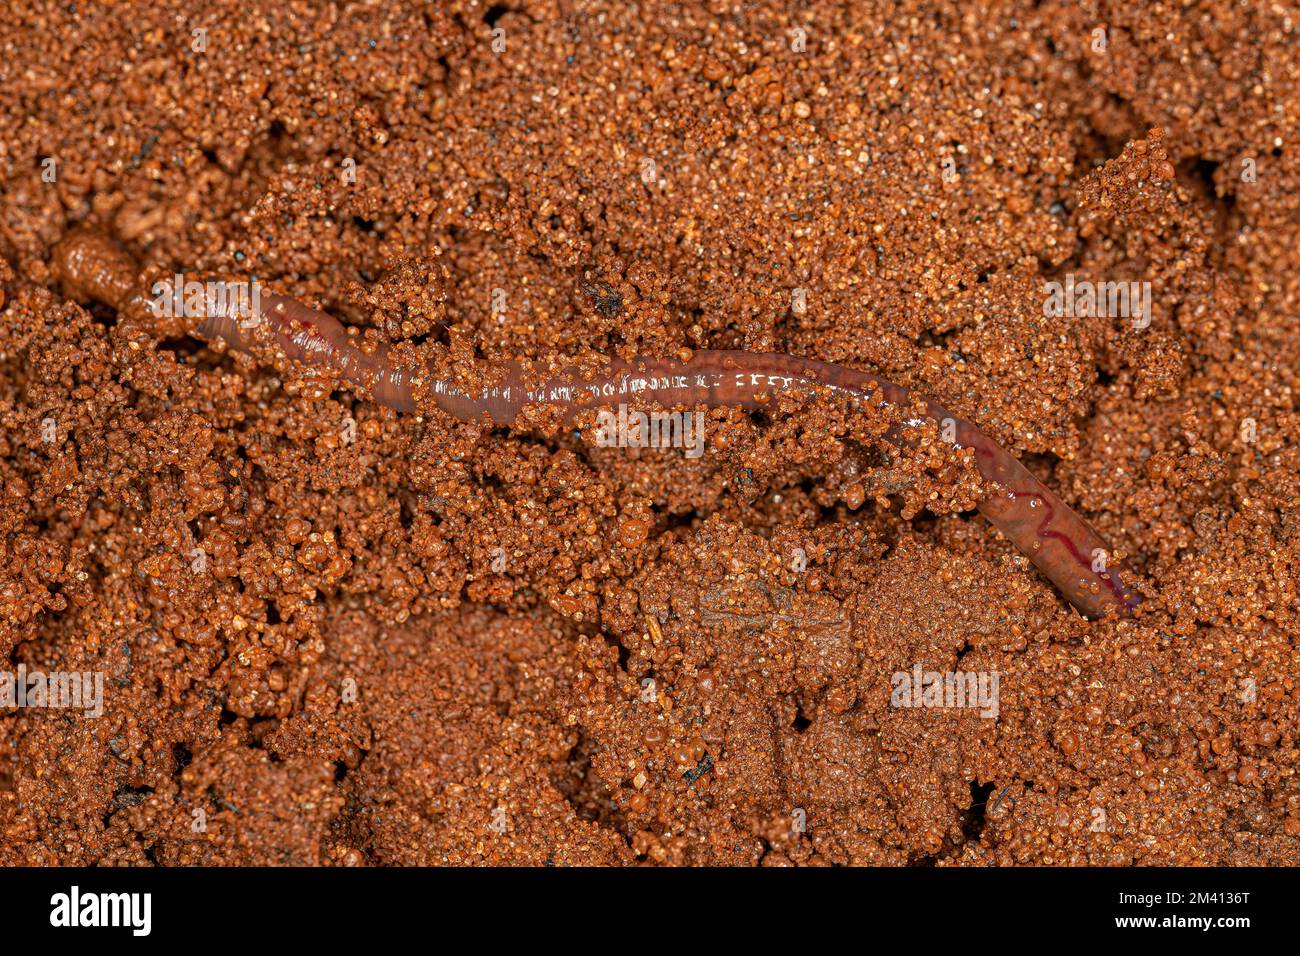 Small Earthworm Arthropod of the Subclass Oligochaeta Stock Photo